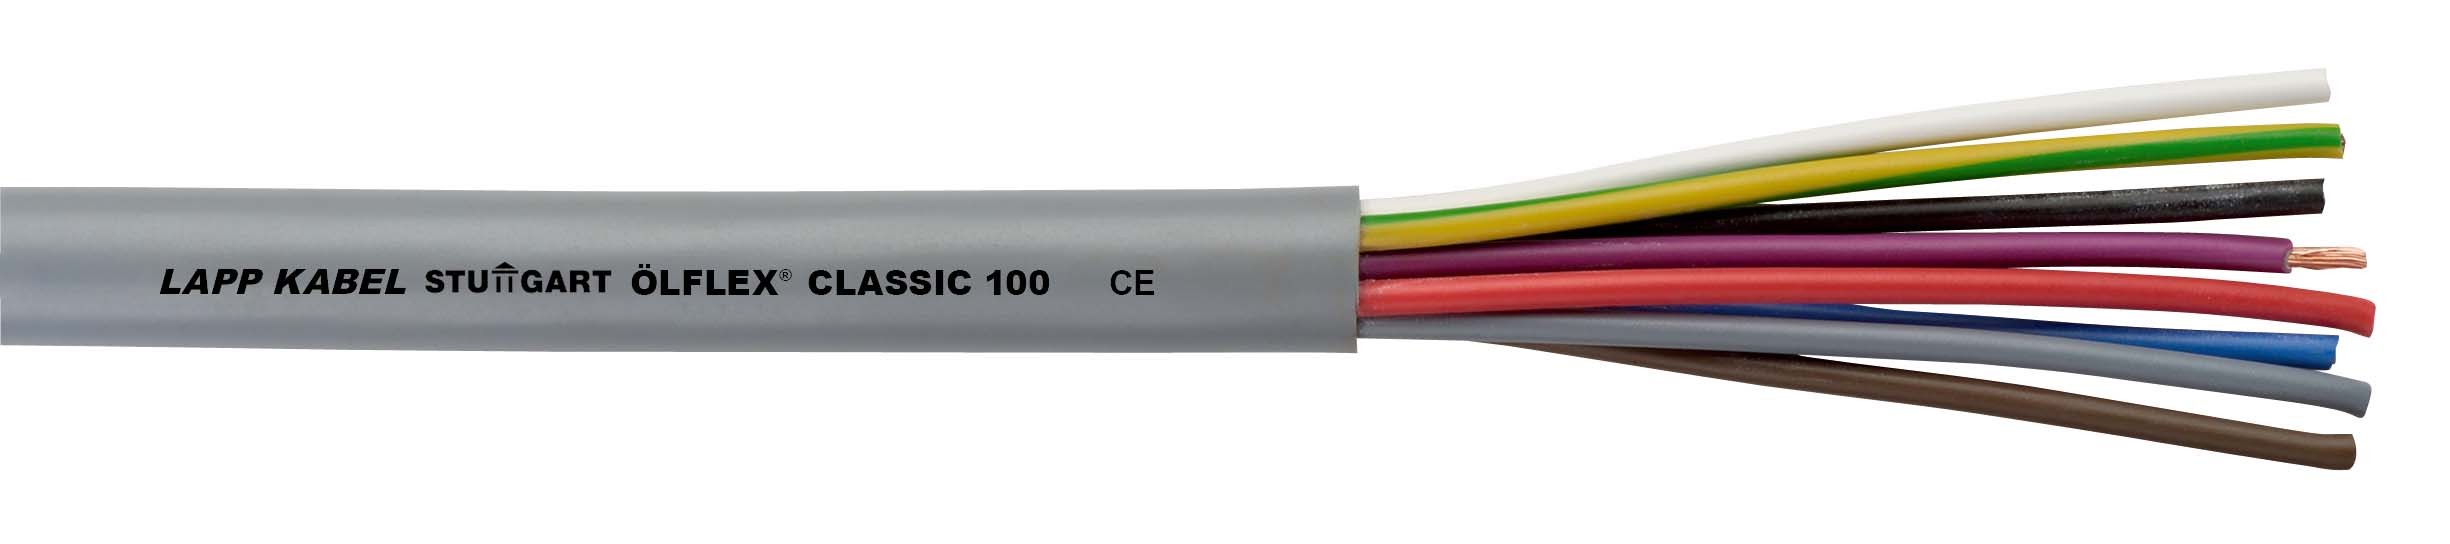 ÖLFLEX CLASSIC 100 3G2,5 0010087 R100 